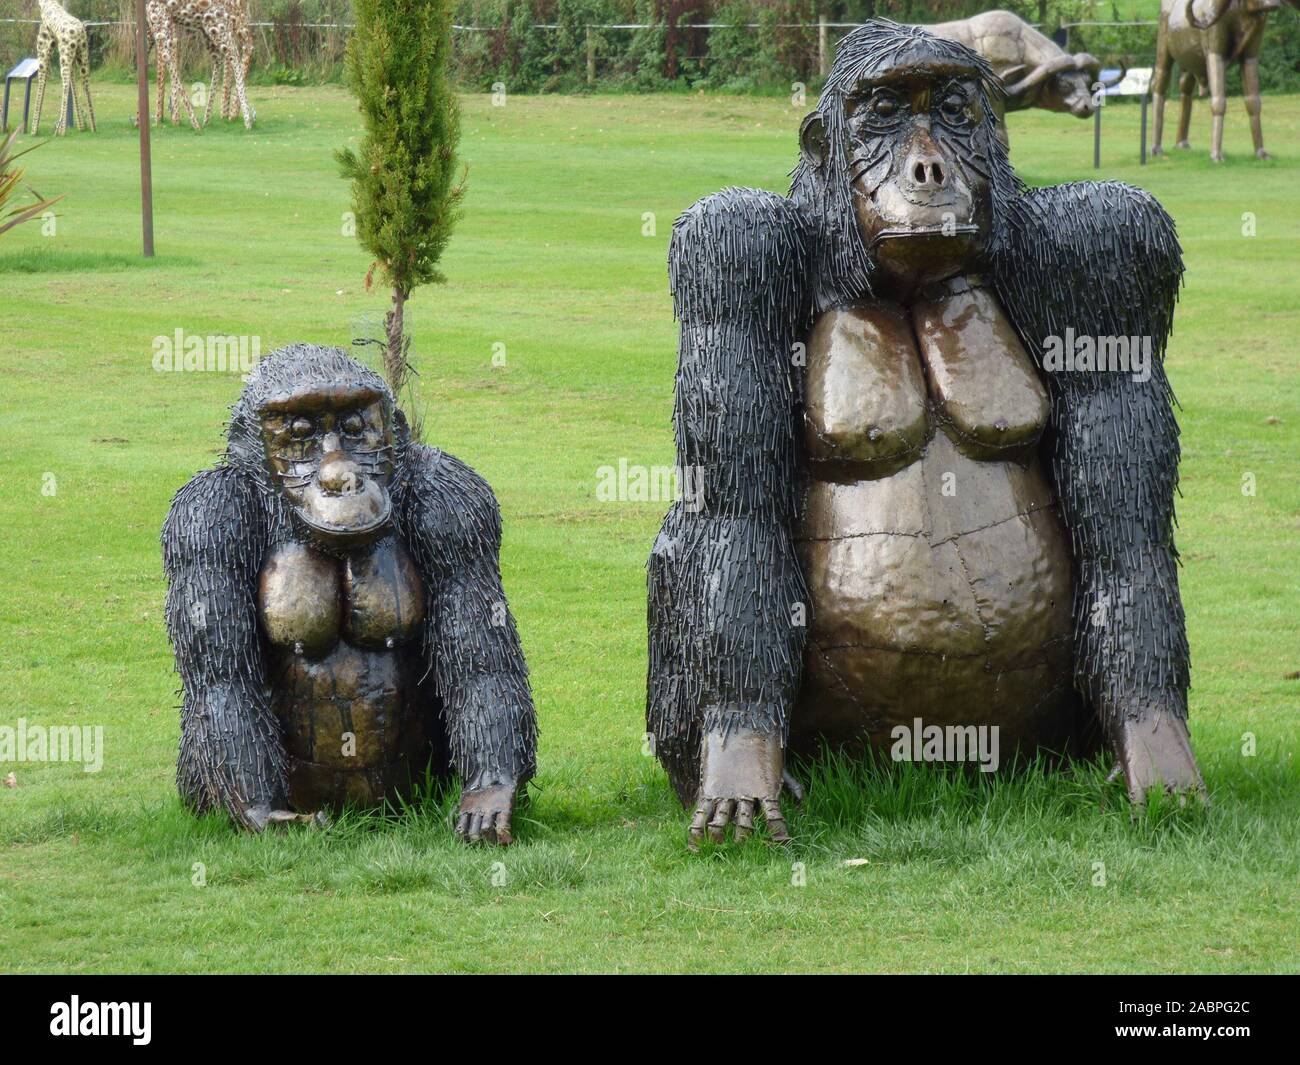 Gorilla sculptures at the British Ironwork Centre and Shropshire ...